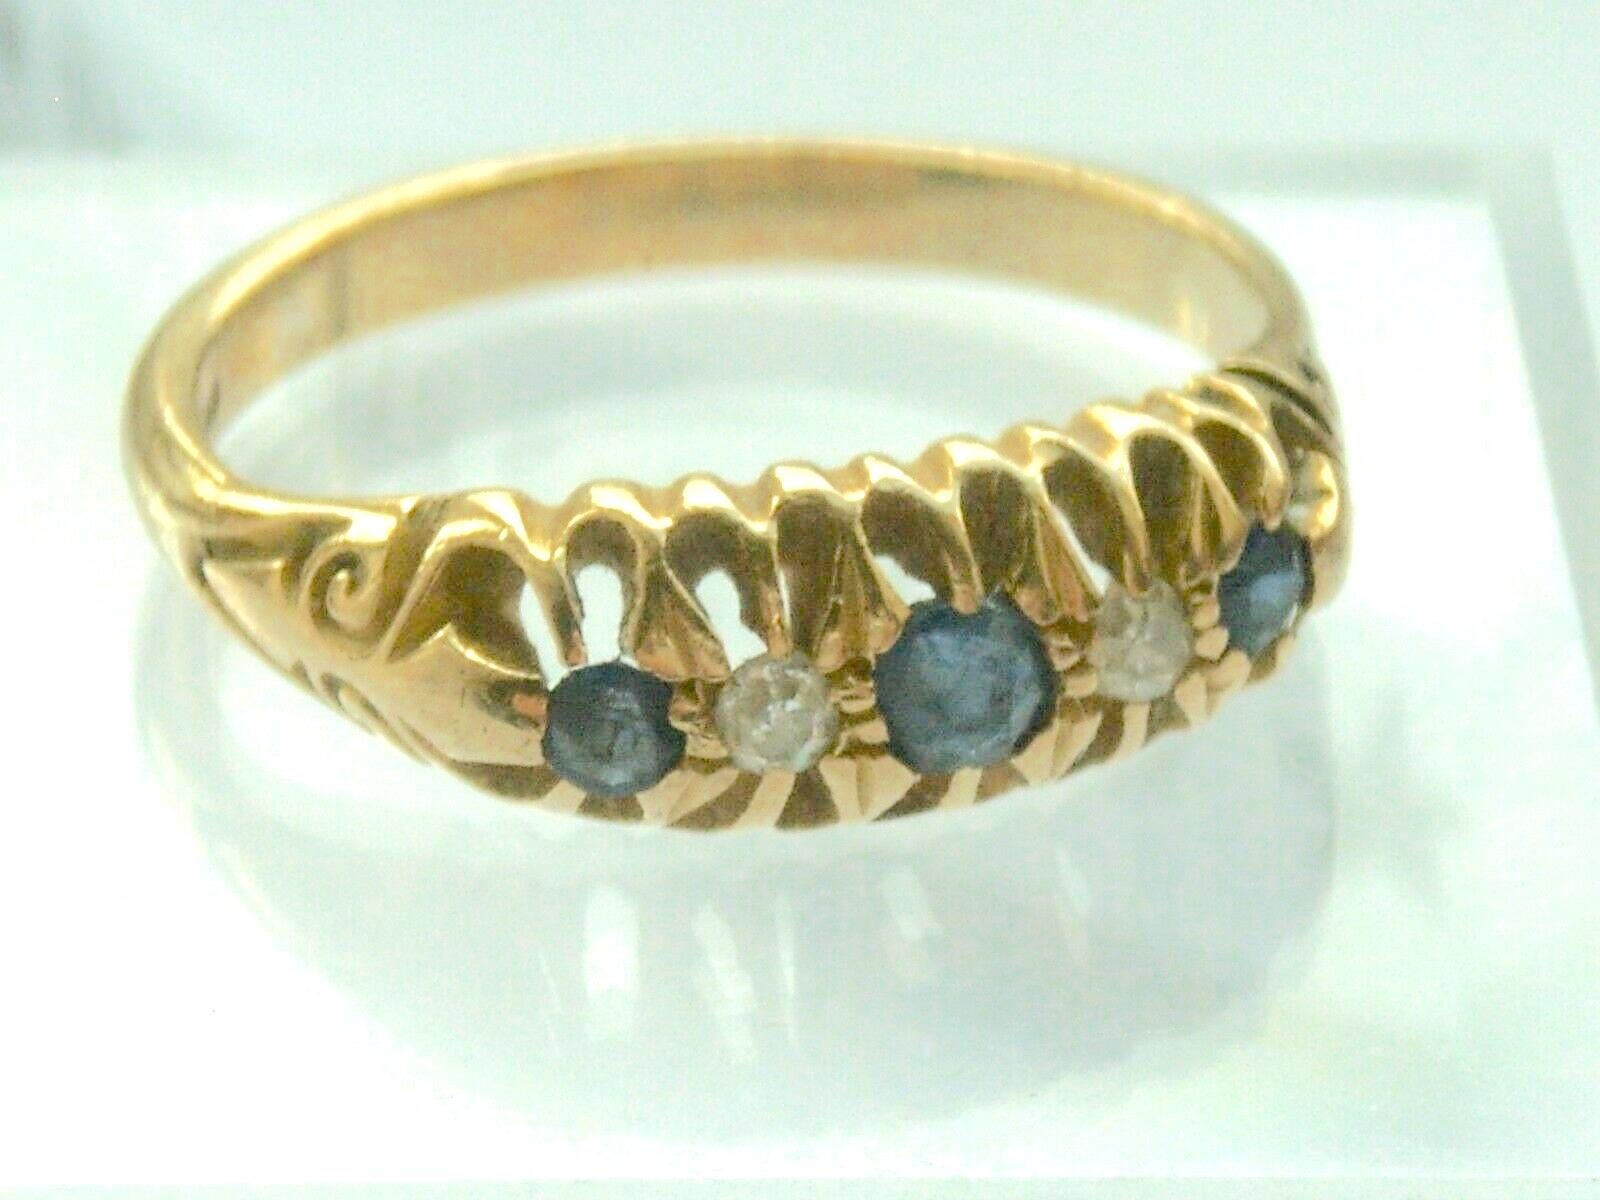 9ct 375 Gold 0.06 Carat Antique Edwardian Diamond Ring
Two Genuine Diamonds 2mm each & Three  3.5mm & 2 x 2.5mm dark blue sapphire stones
Fully Hallmarked by London Assay offices
 Size U.K   P = 17.75 mm (inner diameter)
         U.S   7/5
